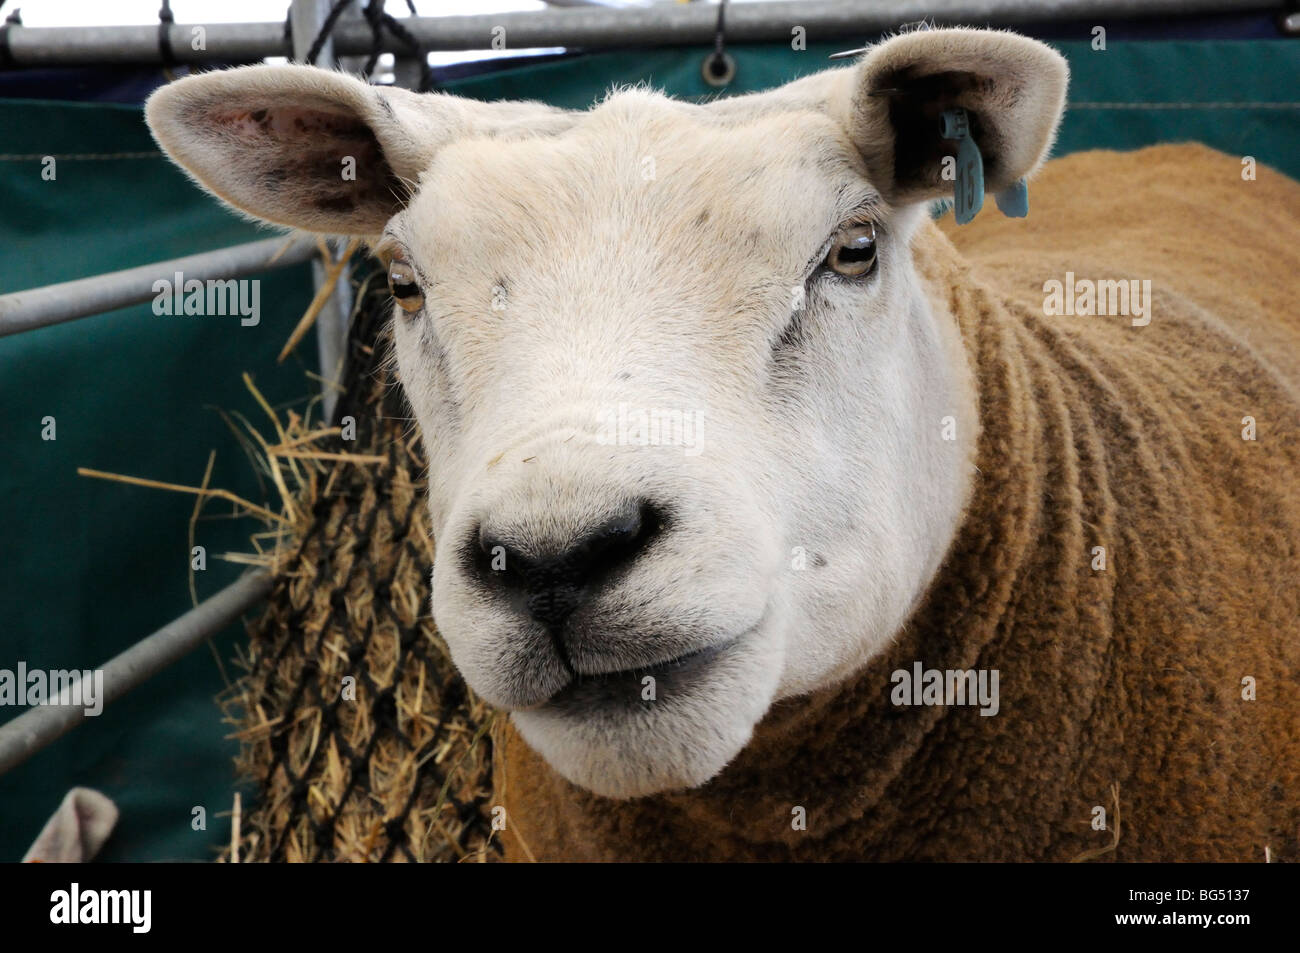 Texel sheep at the 2009 Royal Highland Show, Ingliston, Edinburgh, Scotland, UK. Stock Photo